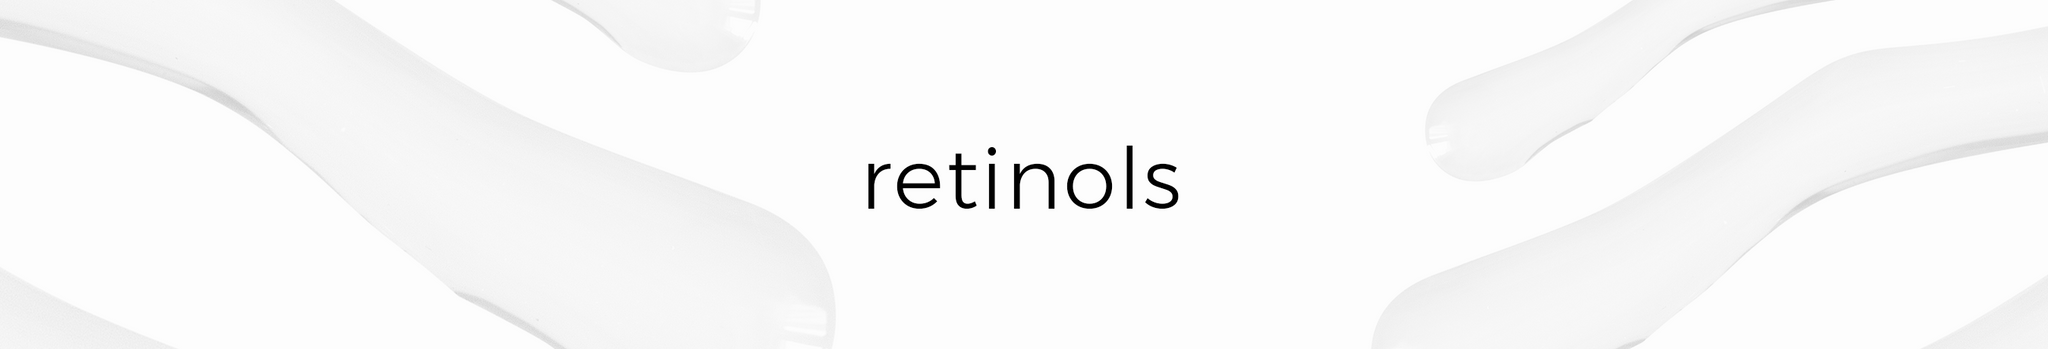 retinols